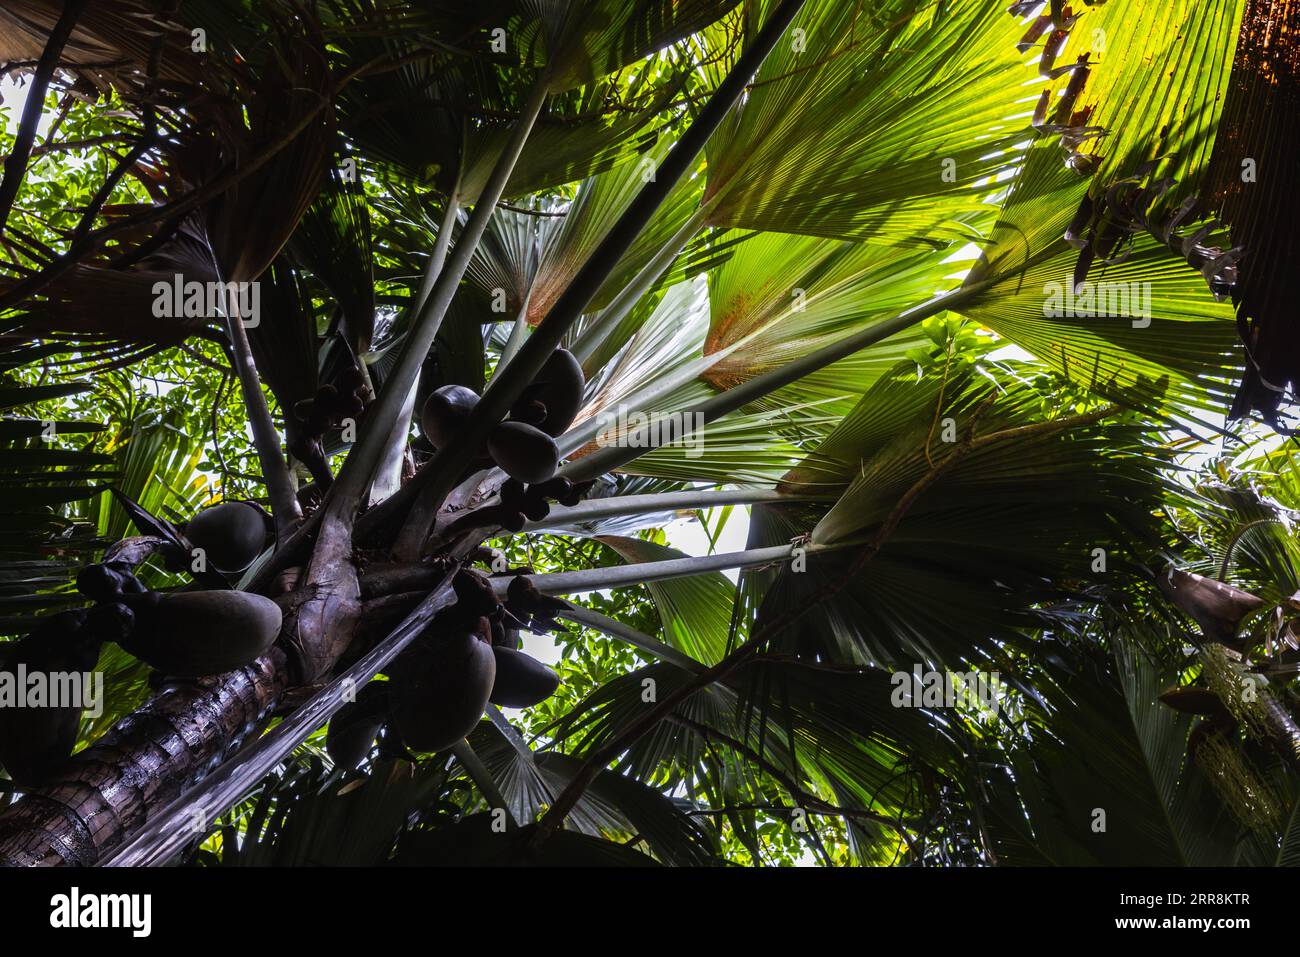 Coco de mer fruits, Lodoicea palm tree. Vallee de Mai, Praslin island, Seychelles Stock Photo